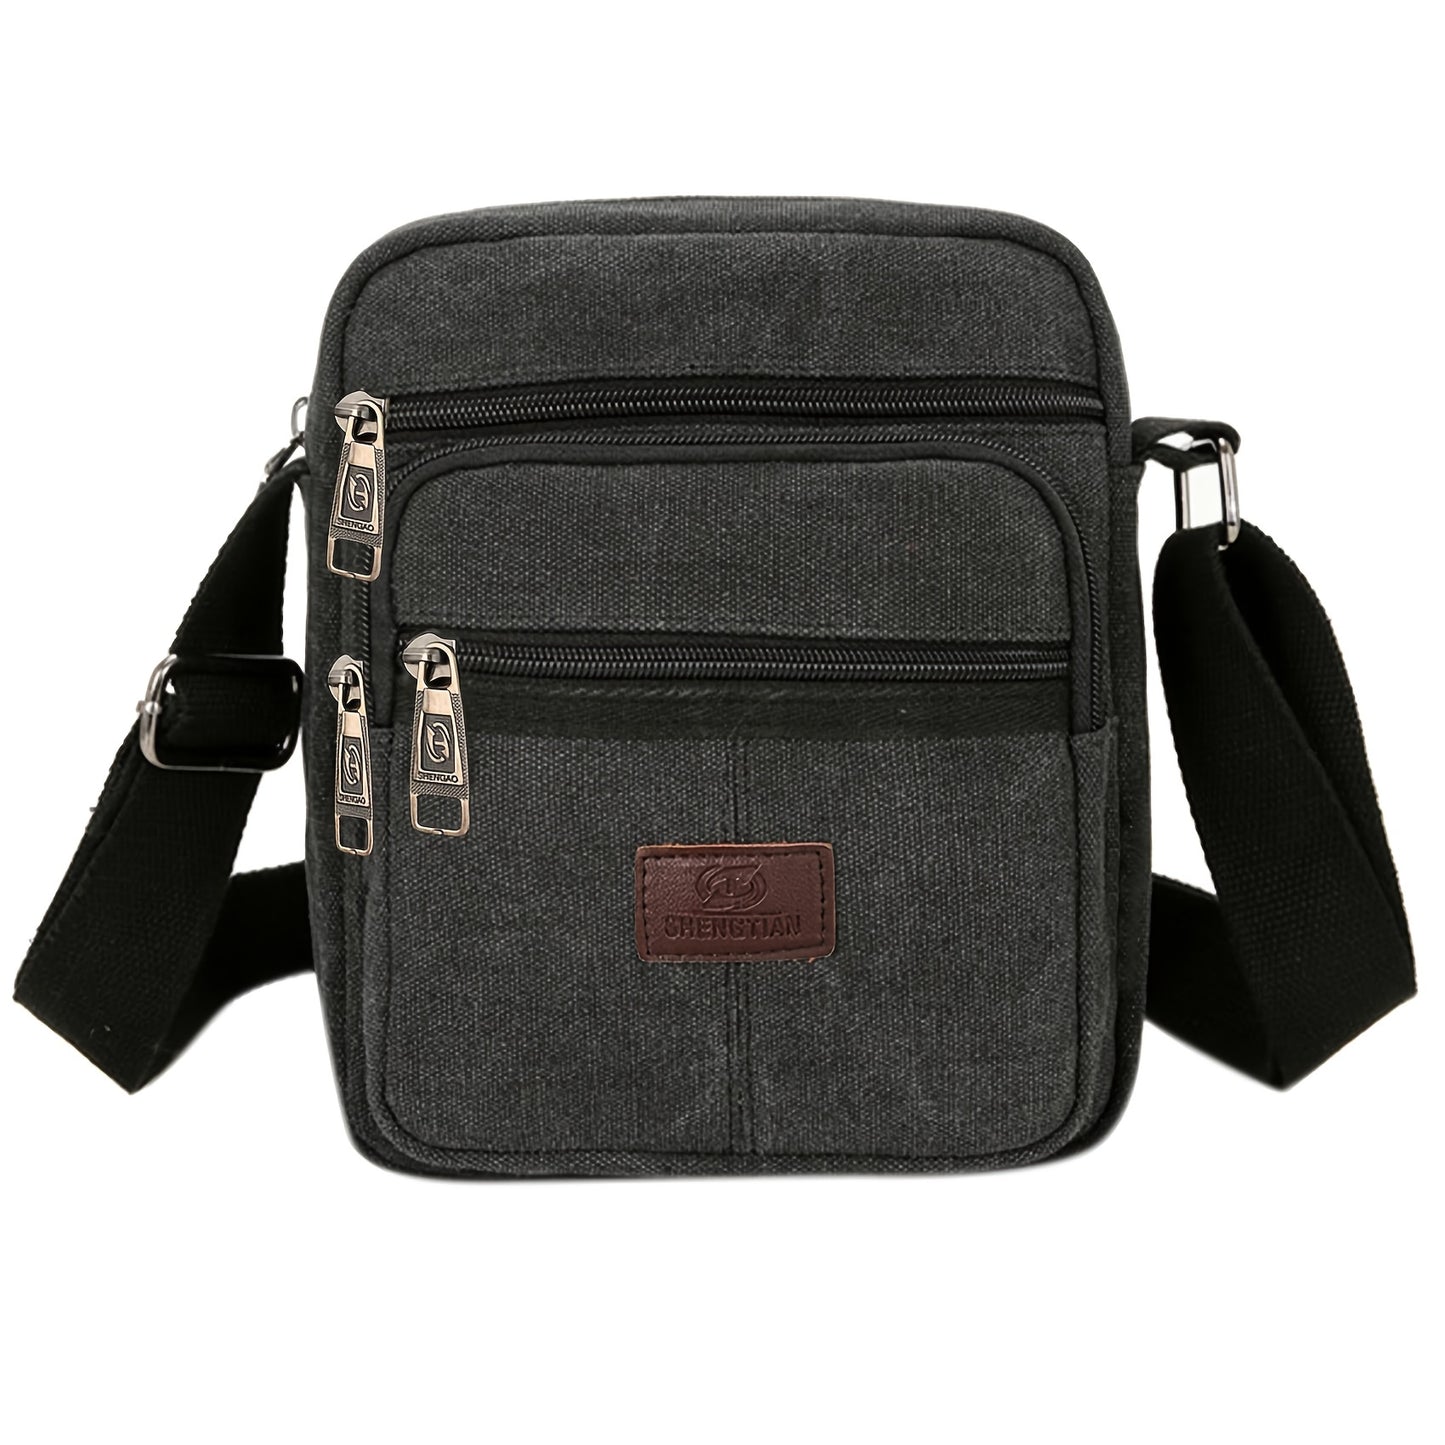 Men's Canvas Crossbody Bag, Casual Travel Messenger Bag